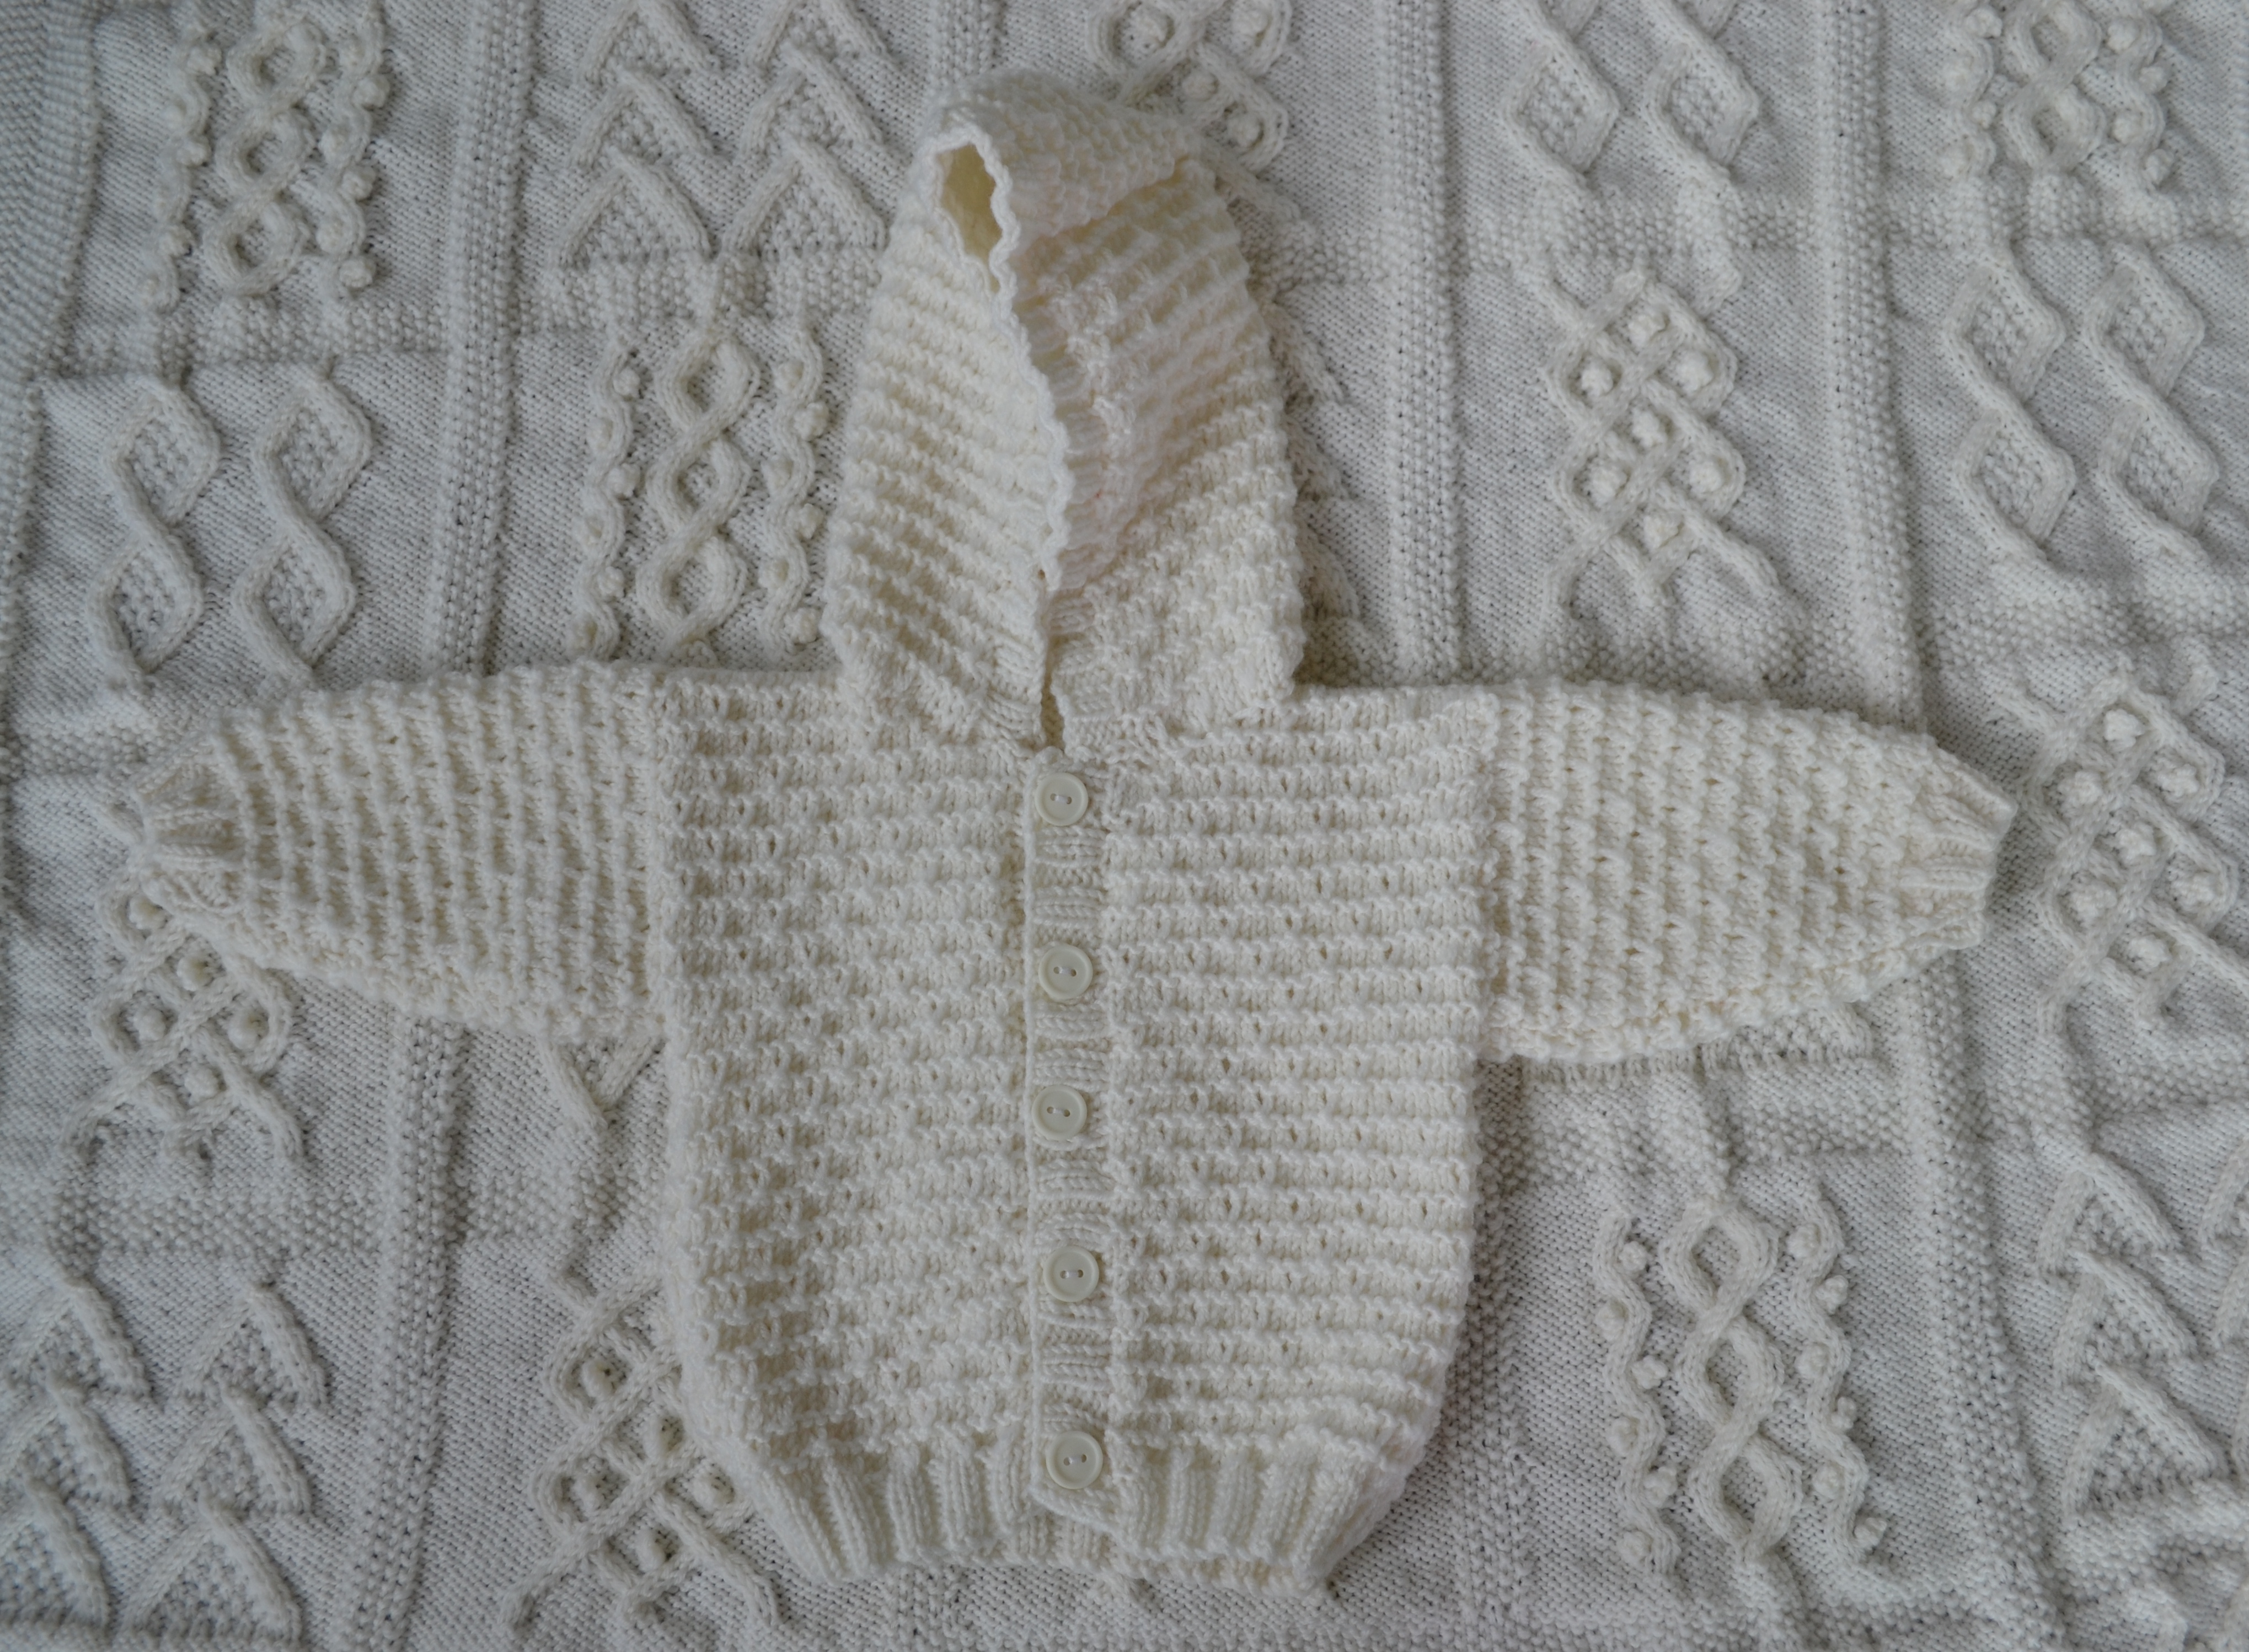 Newborn Knit Patterns Free Knitting Patterns For Newborn Sweaters